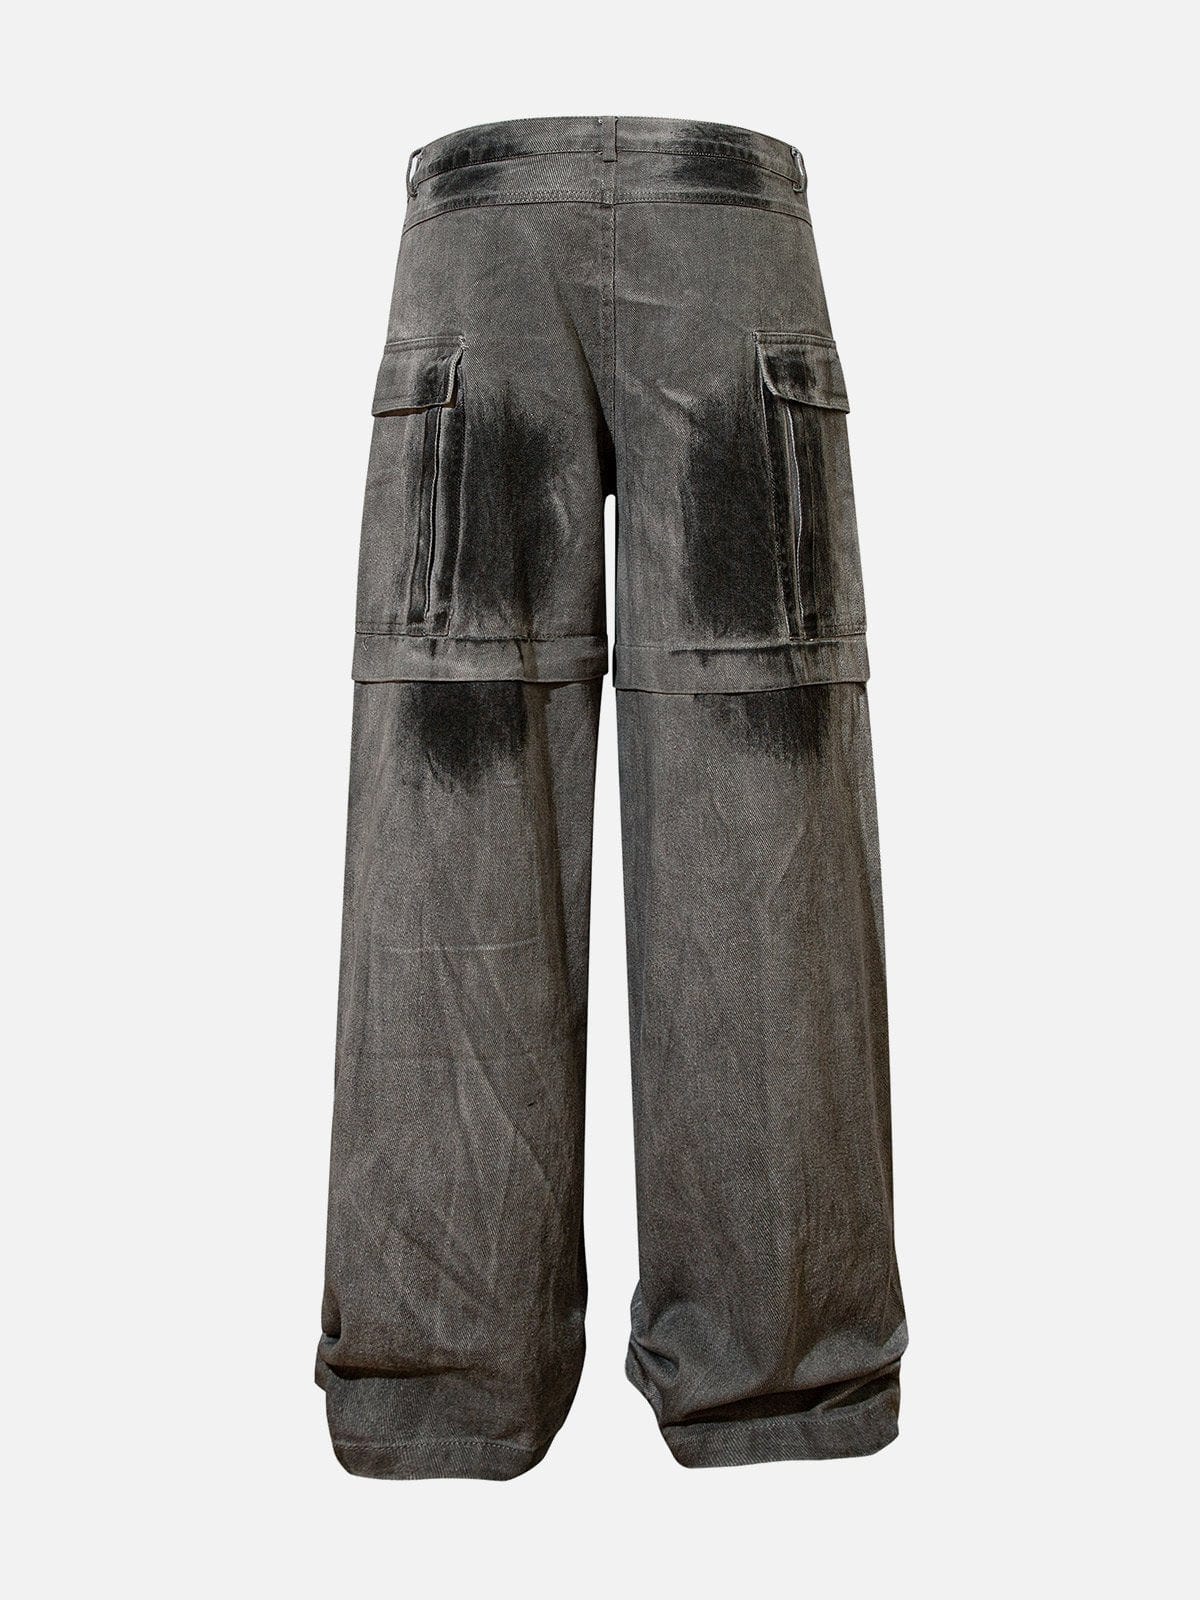 NEV Wasteland Style Distressed Pants